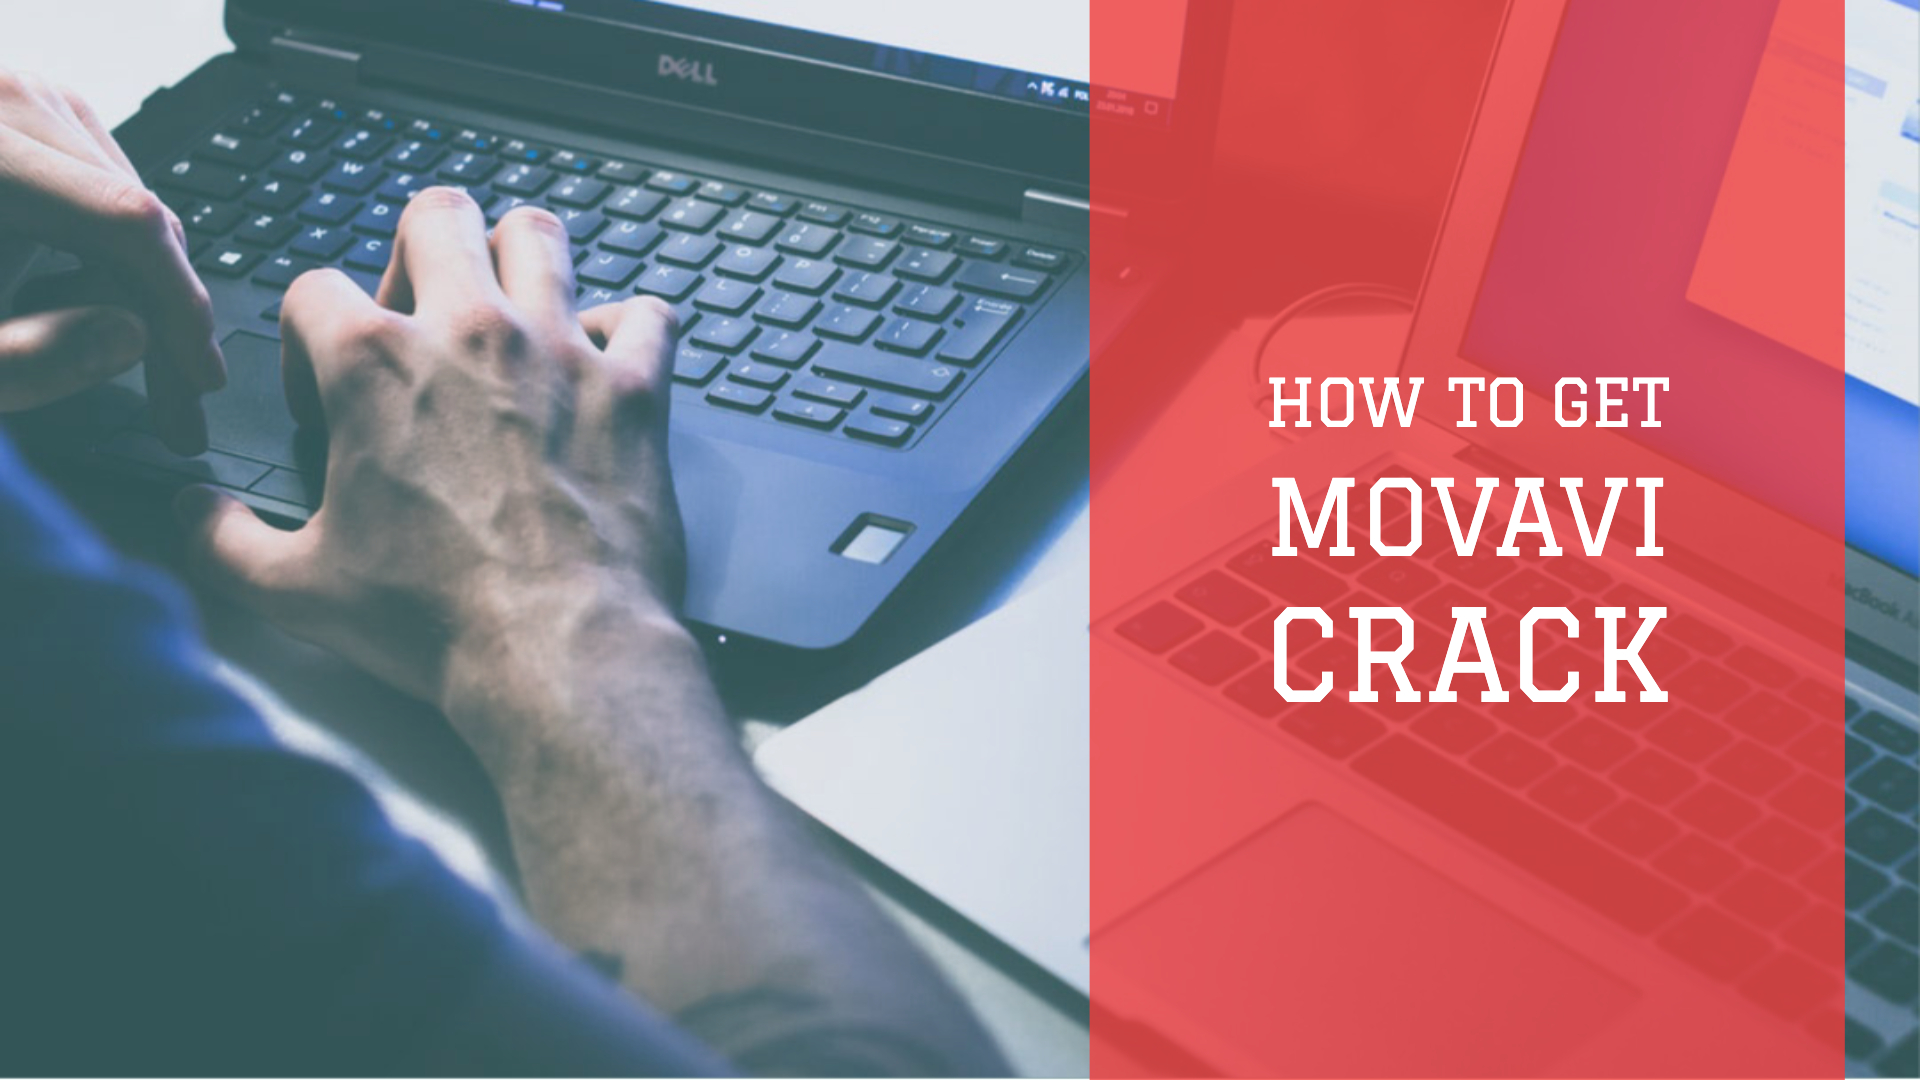 How to get Movavi Crack? TechRev.me